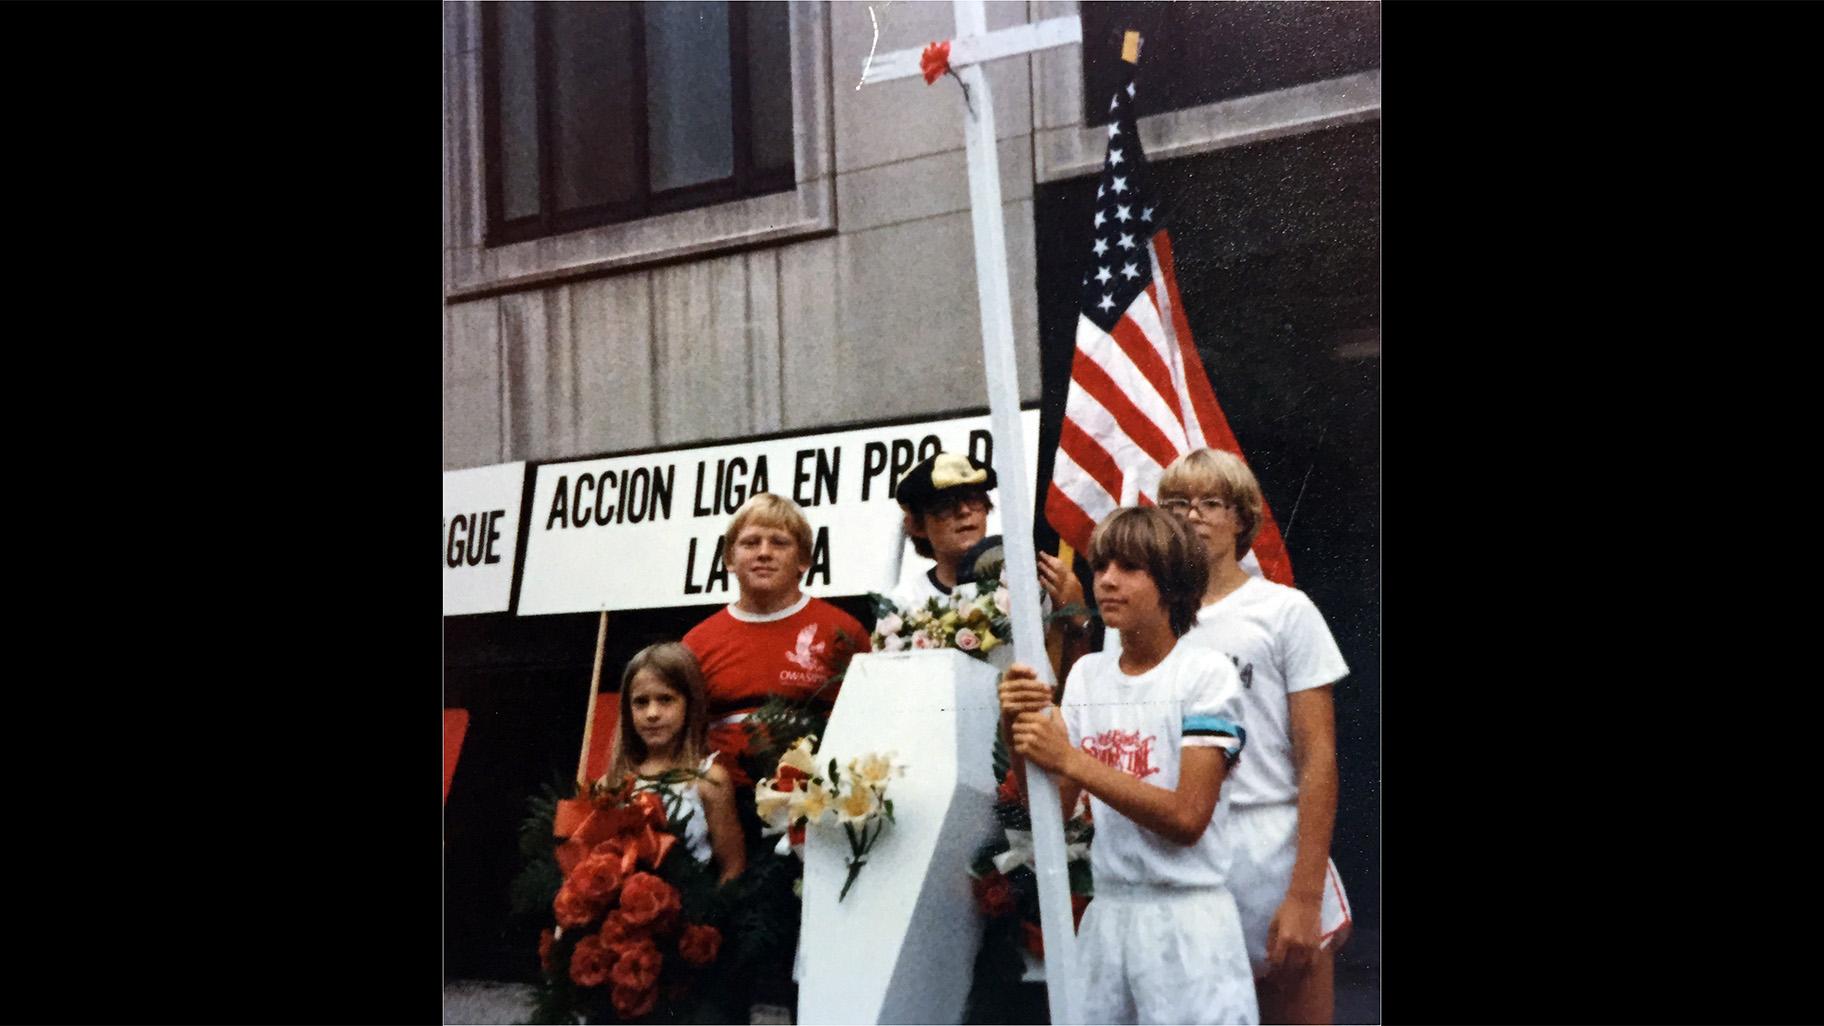 Eric Scheidler (center) attends an anti-abortion protest in 1980. (Courtesy of Eric Scheidler)